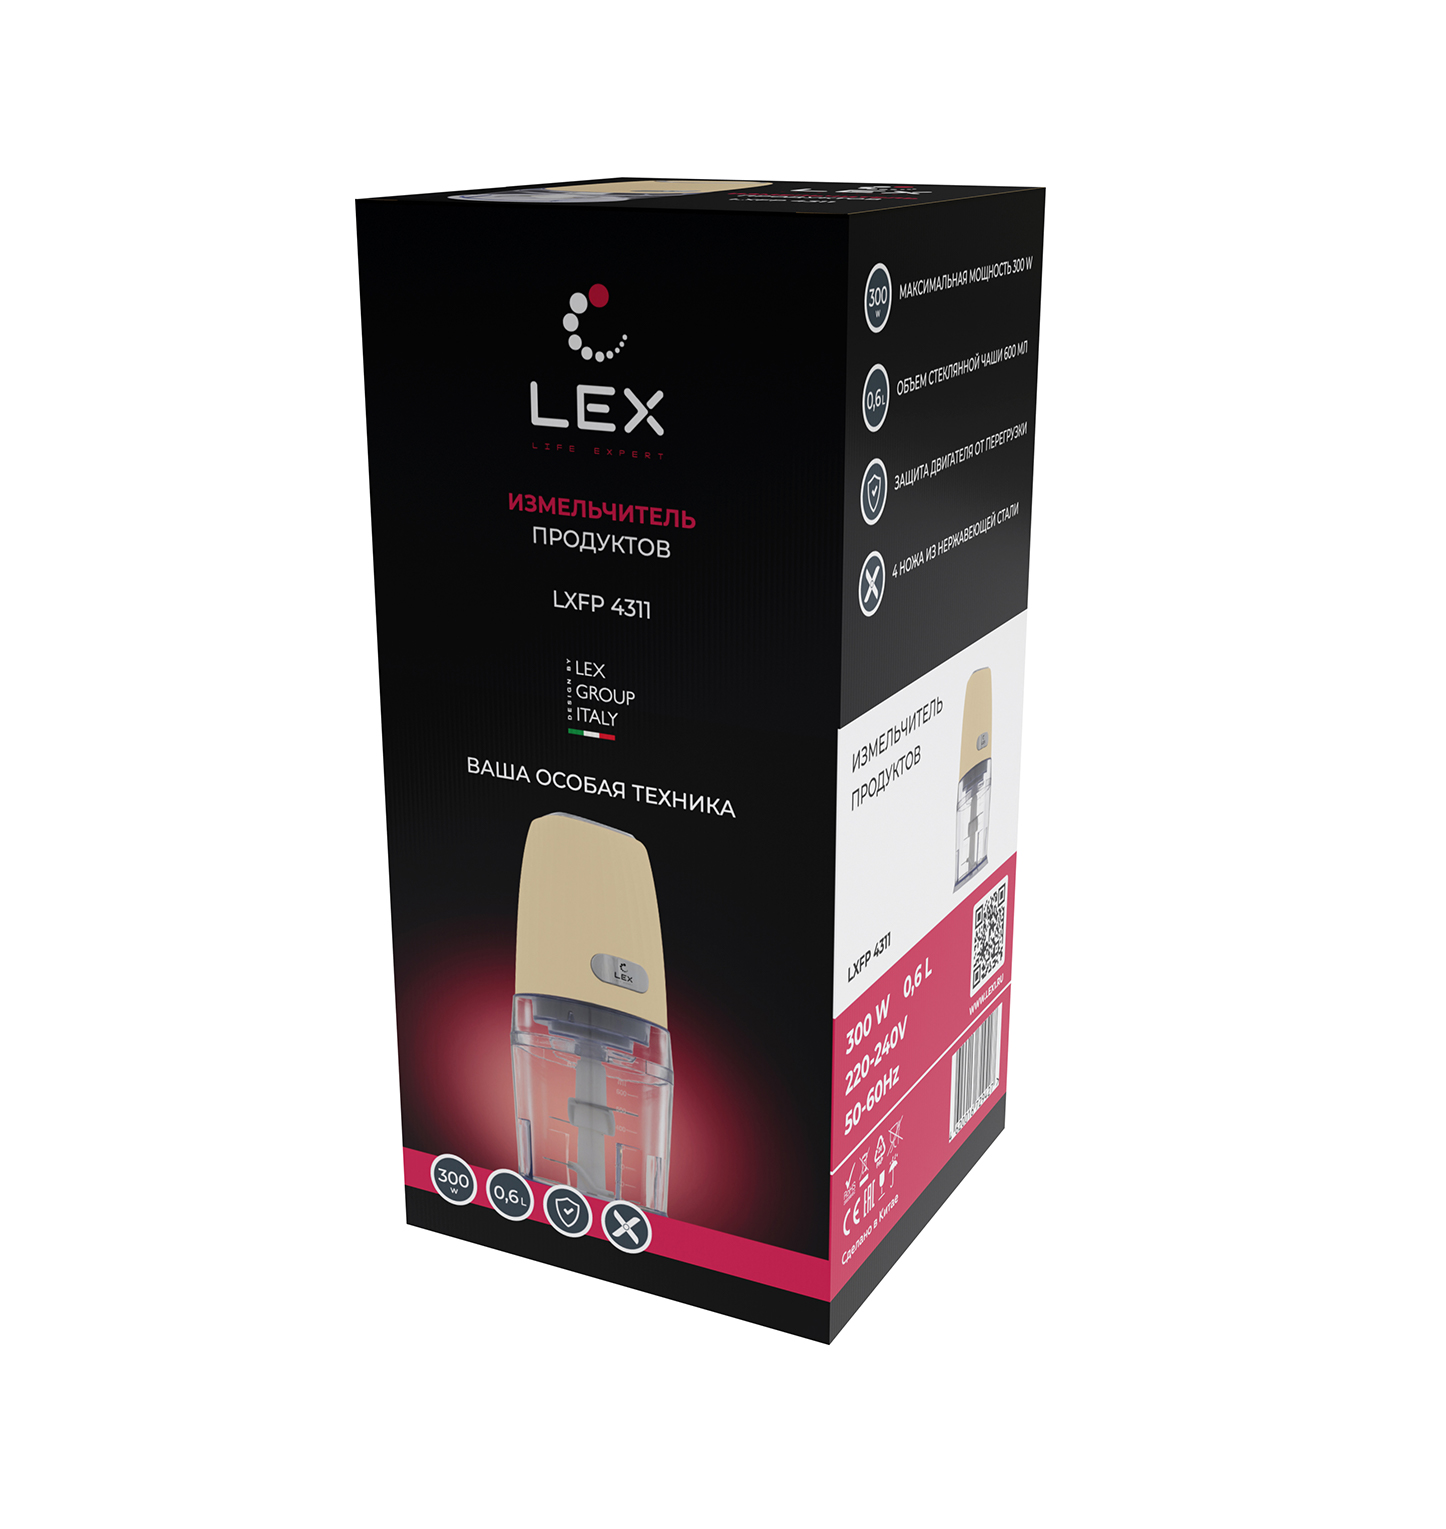 LEX LXFP 4311